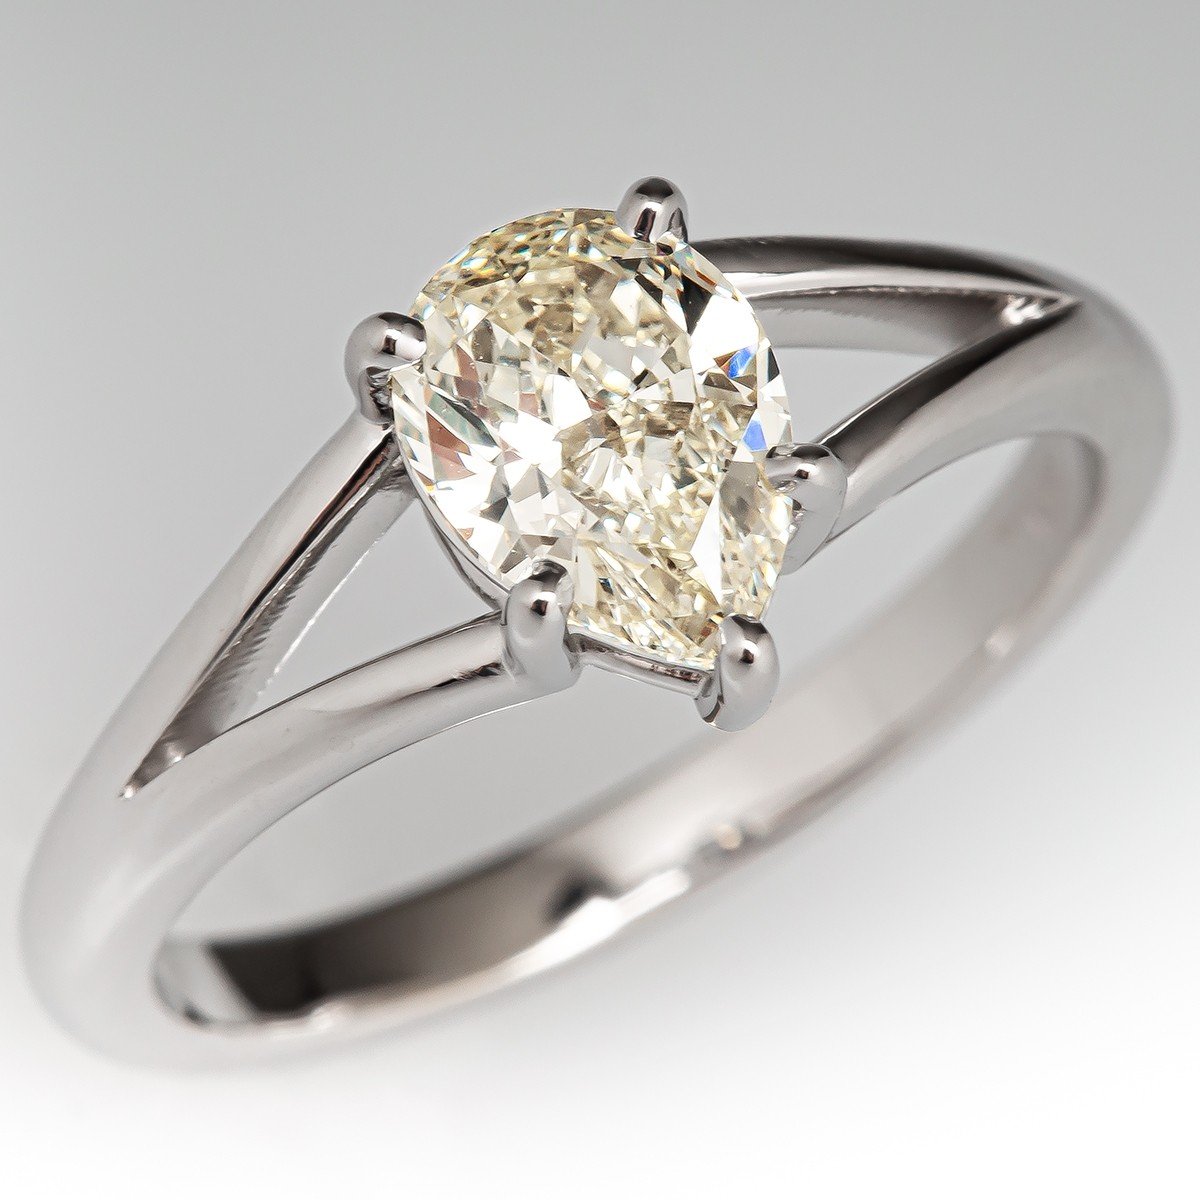 Low Profile Pear Cut Diamond Engagement Ring 14K White Gold 1.02ct M/VS2